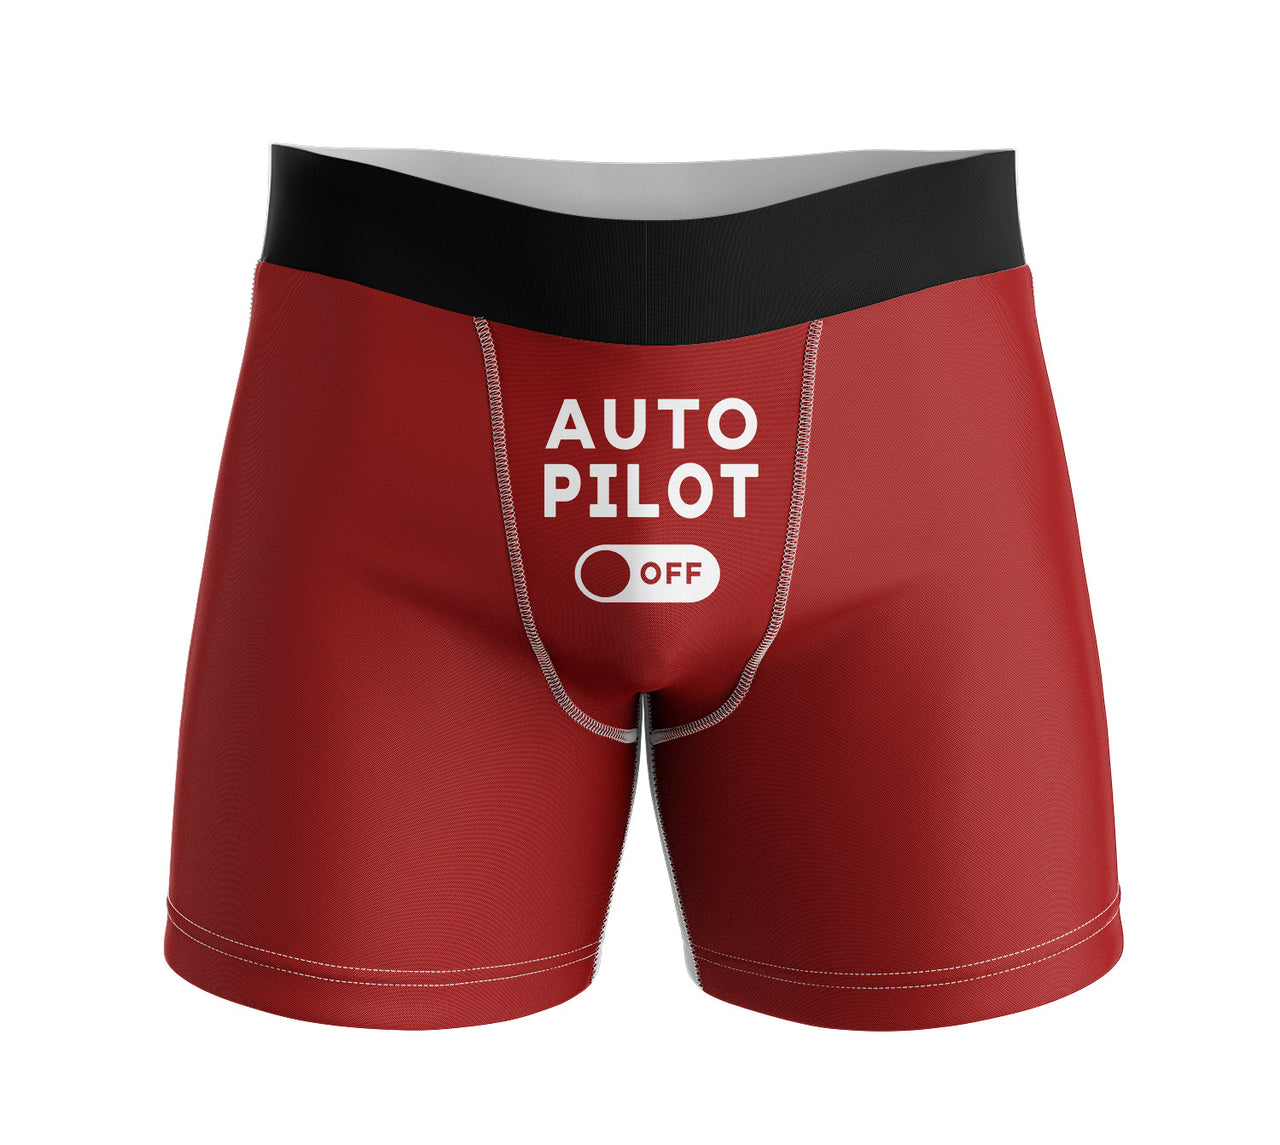 Auto Pilot Off Designed Men Boxers